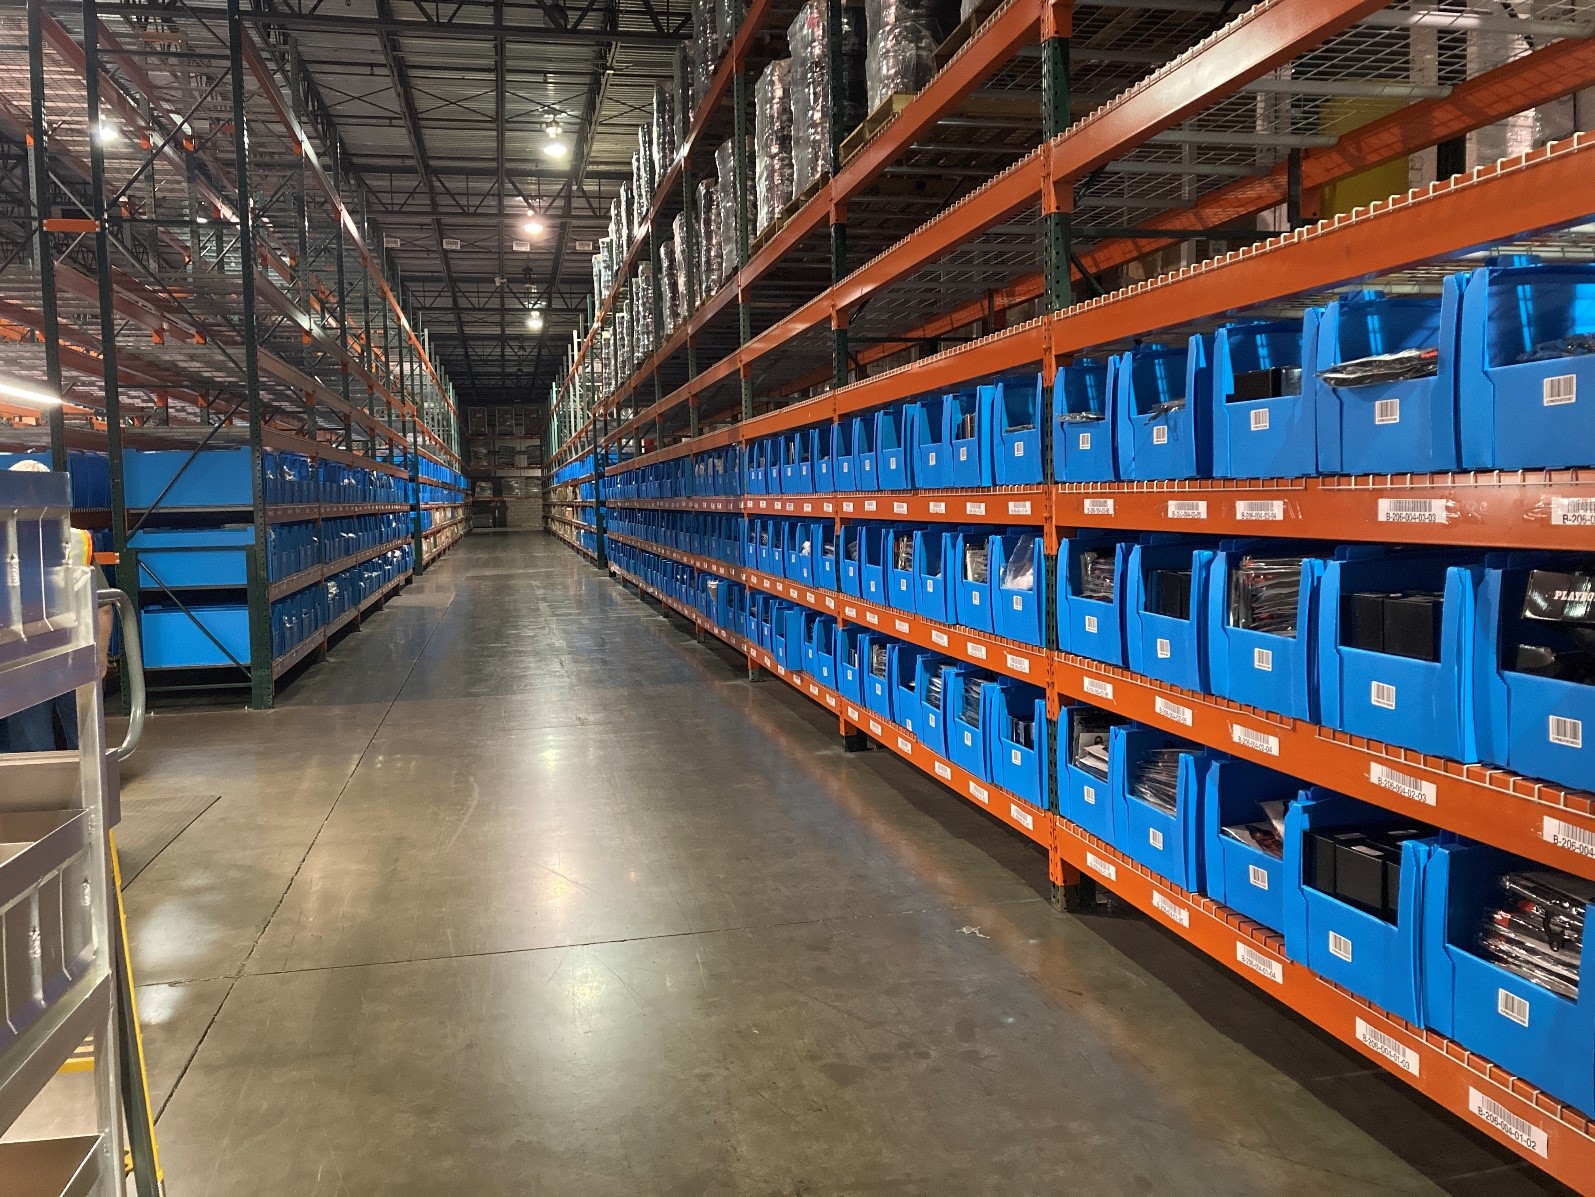 Flexcon warehouse bins racked